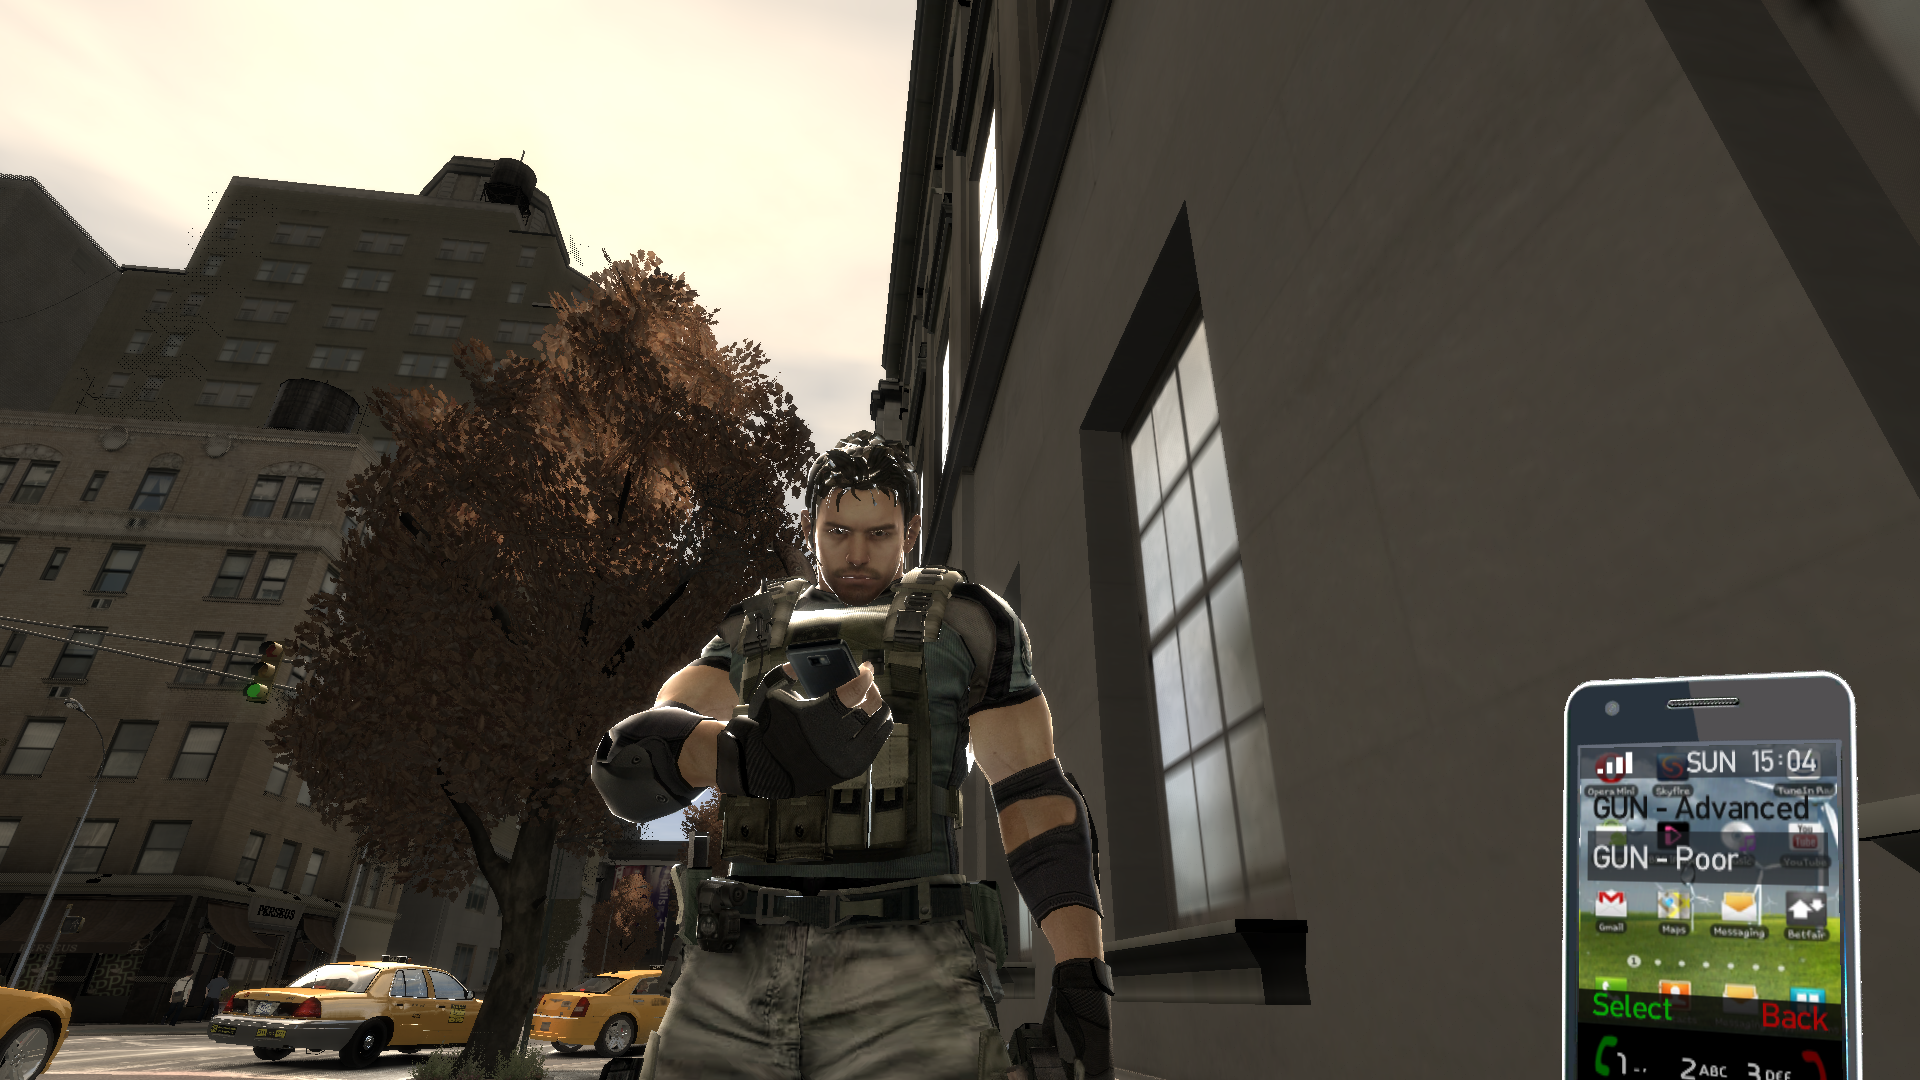 Play as Resident Evil 5 Chris Redfield Mod - Resident